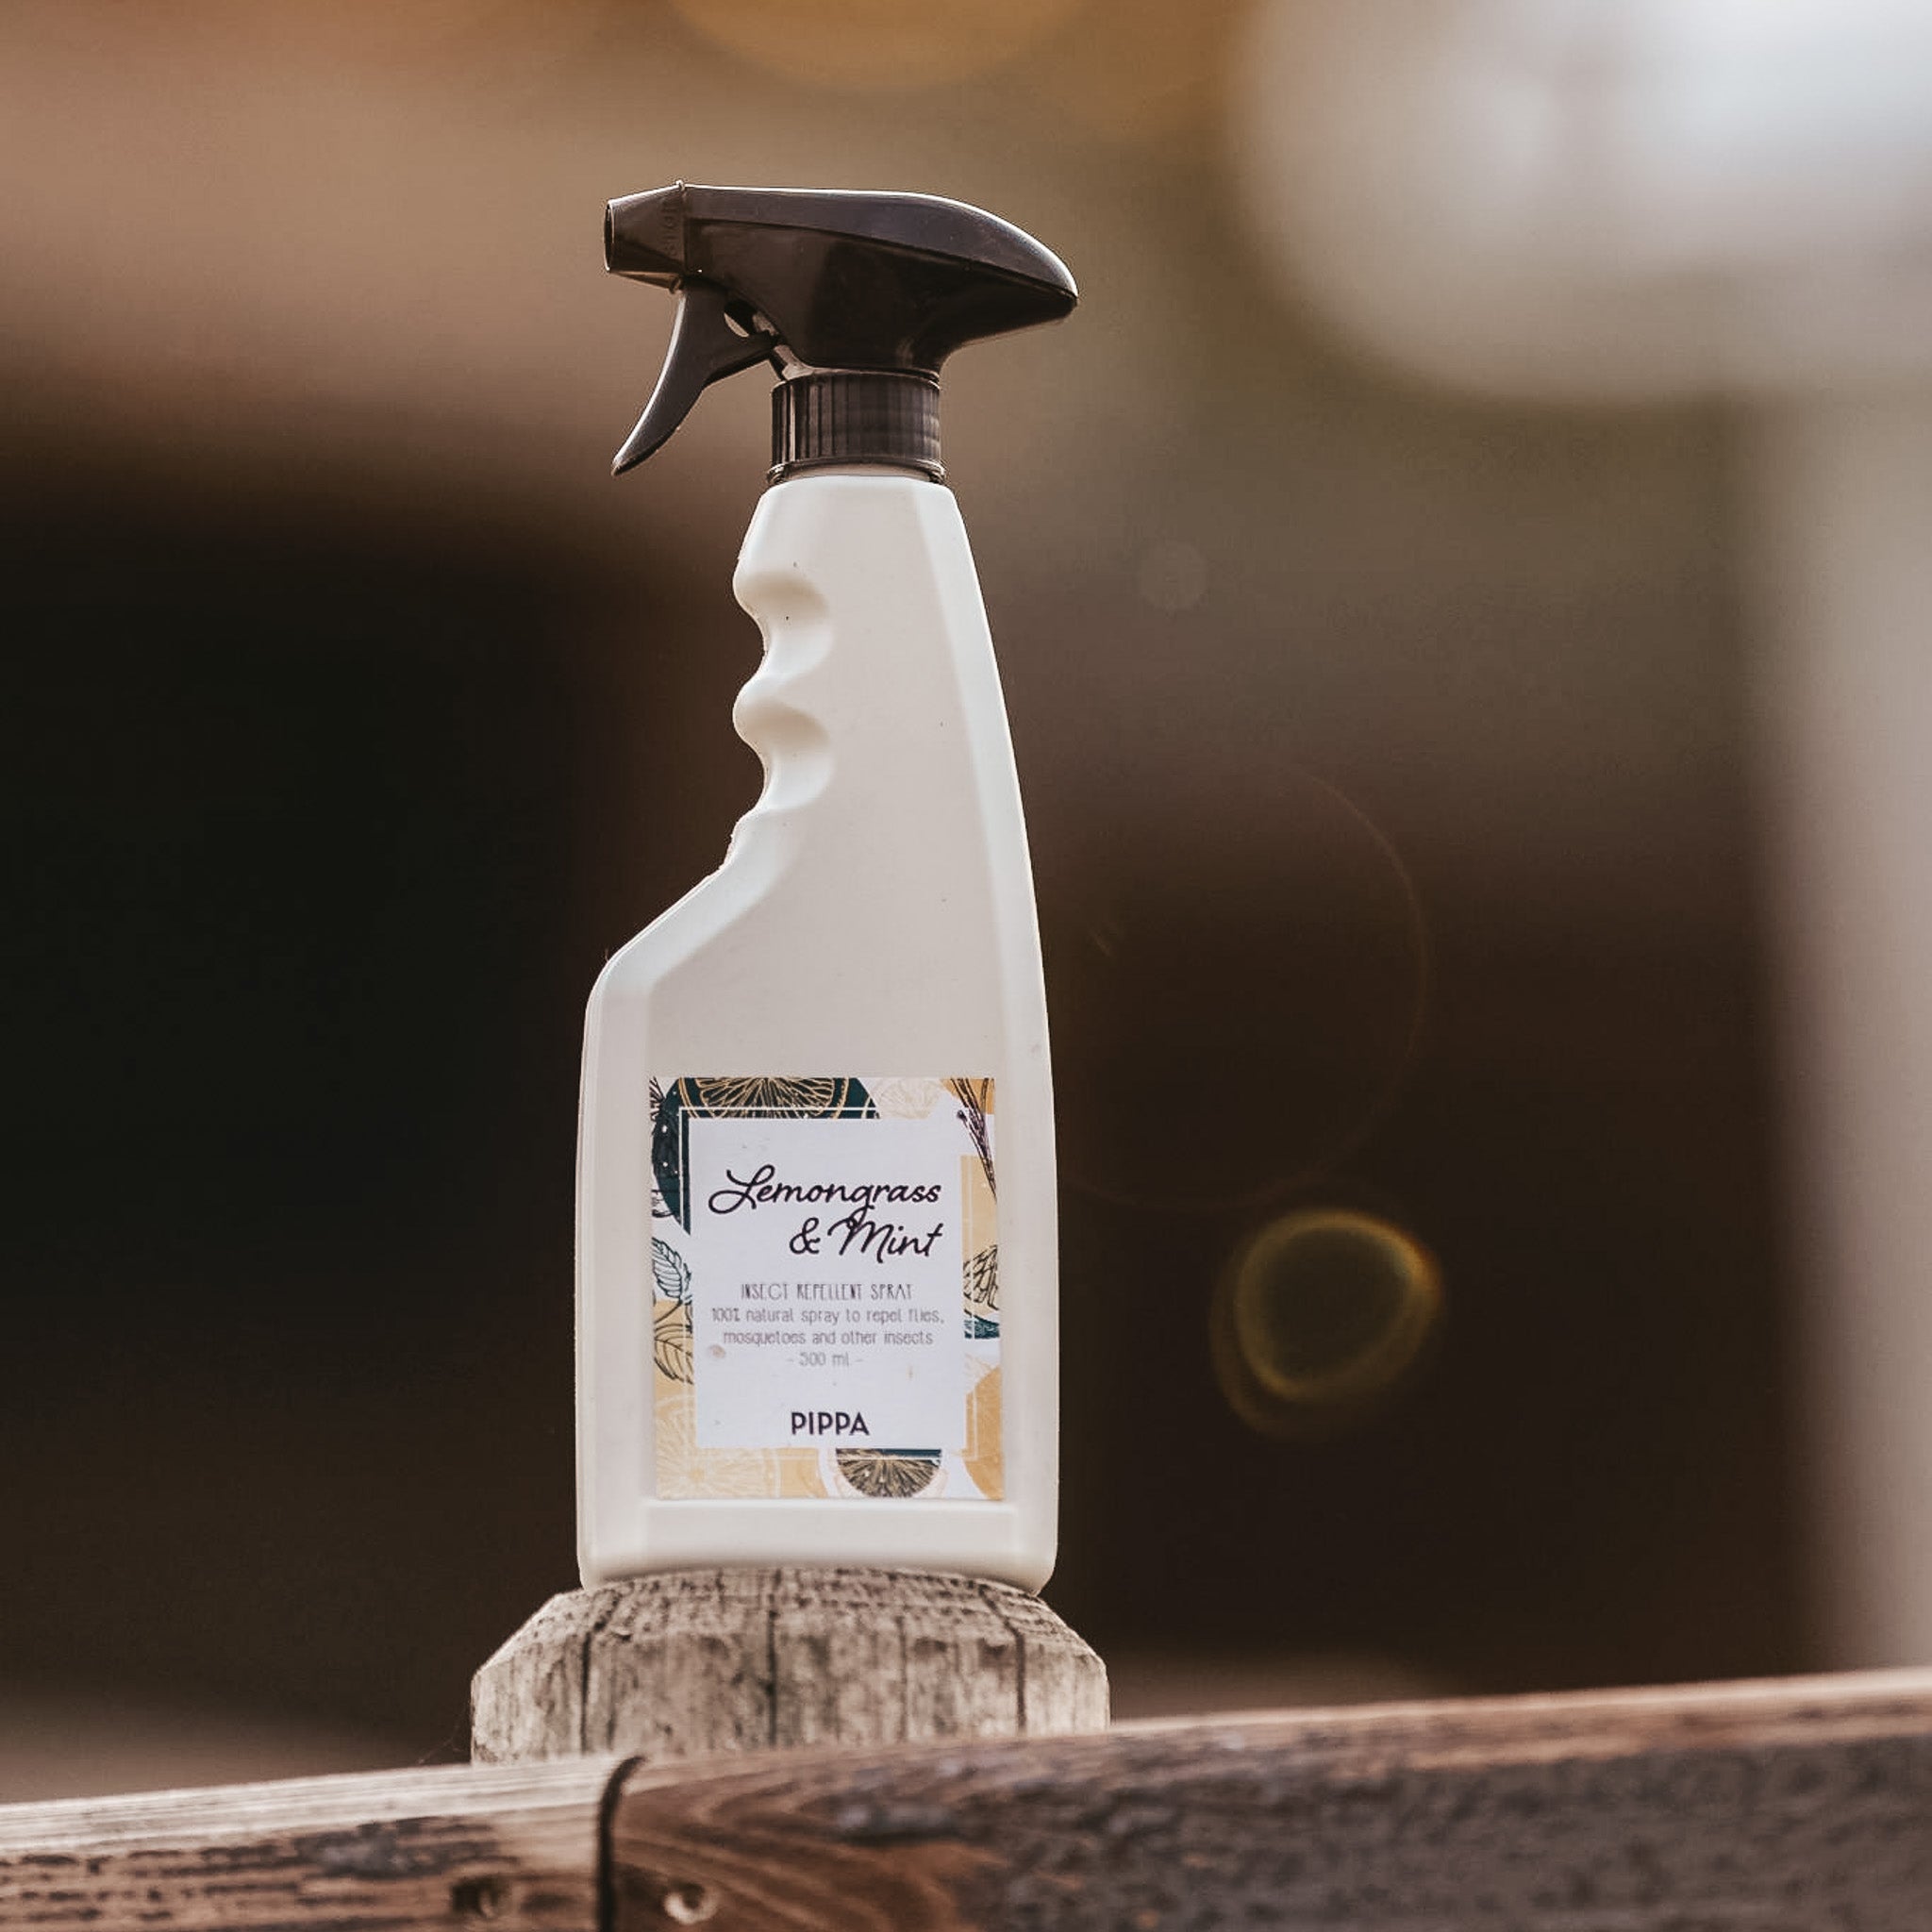 PIPPA Lemongrass & Mint Repellent Refill - PIPPA Equestrian Soap - Spray concentraat